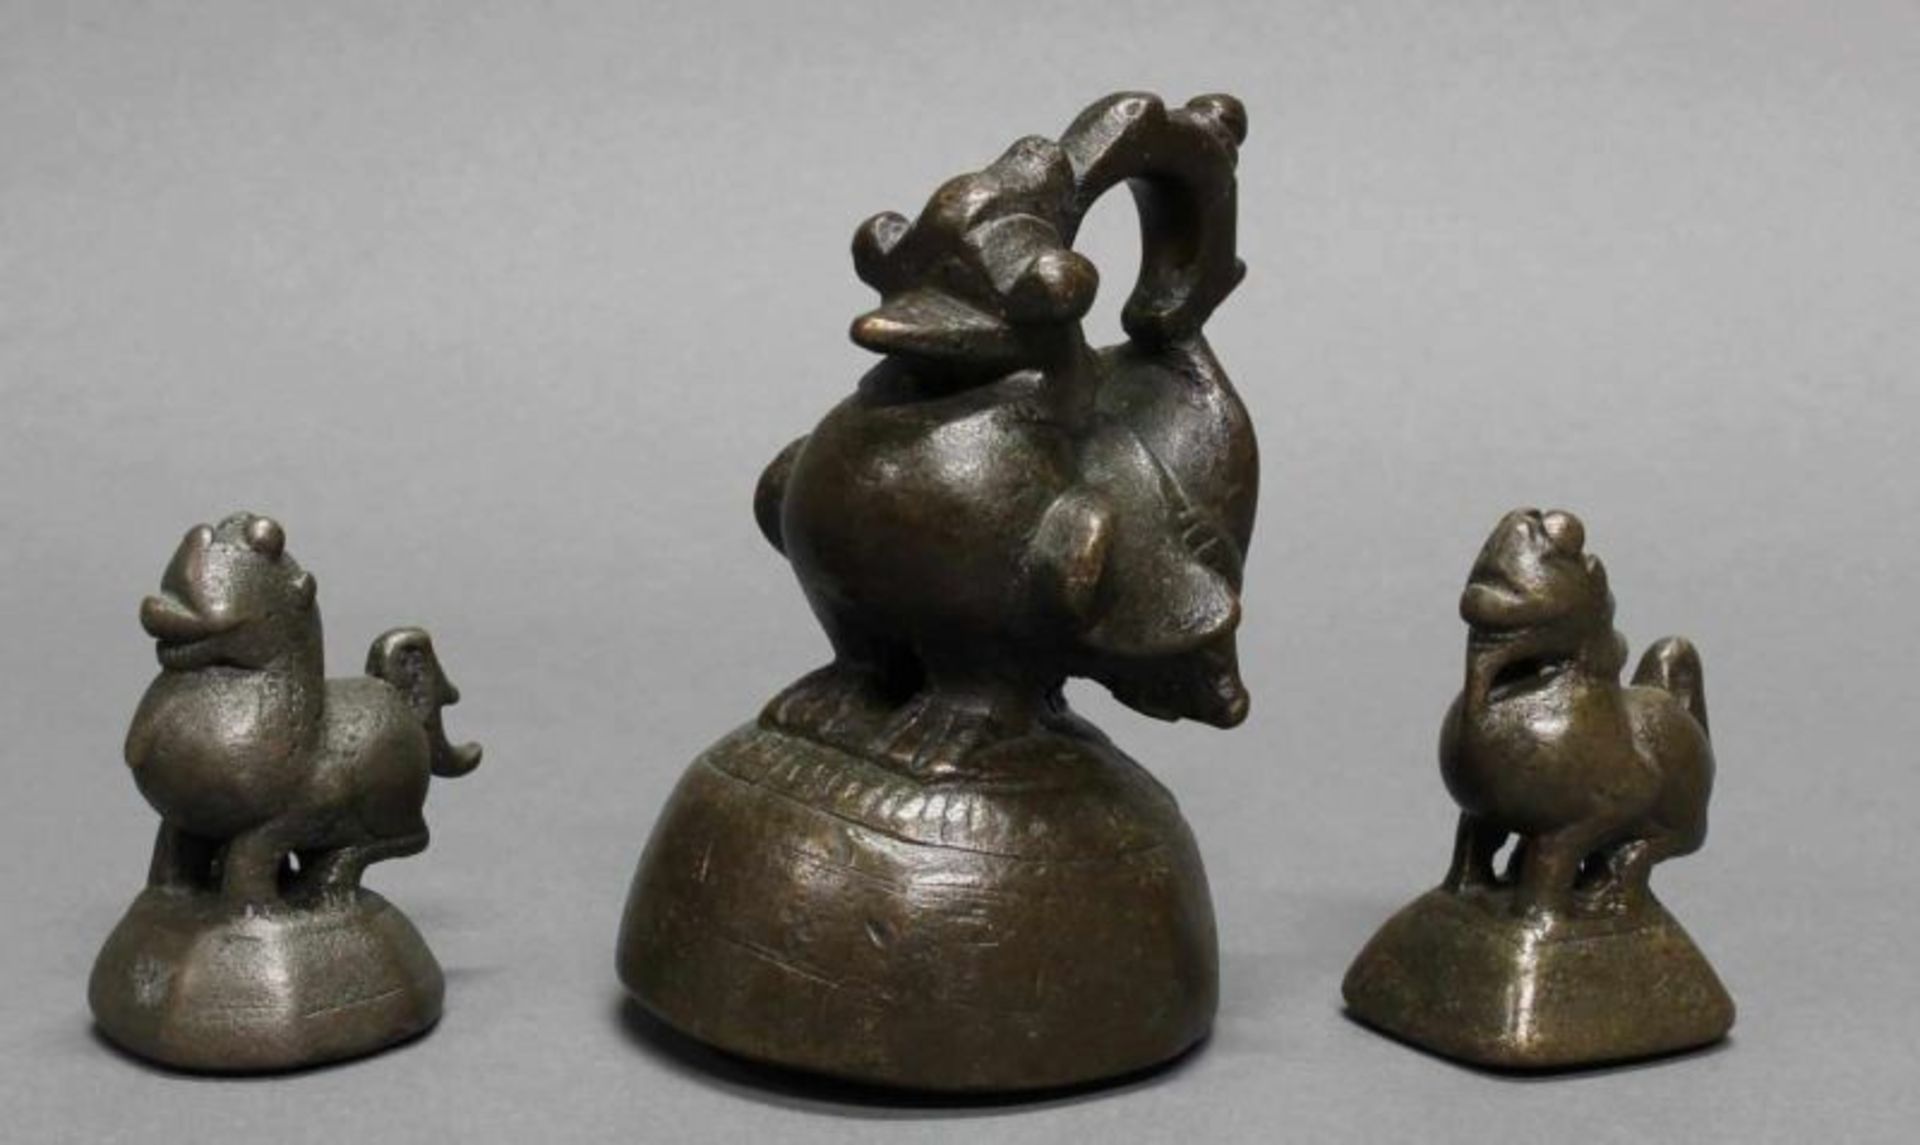 3 Opiumgewichte, Burma, 19. Jh., Bronze, 1x Hahn, 2x Fabeltiere, 6.5-11.5 cm hoch 20.00 % buyer's